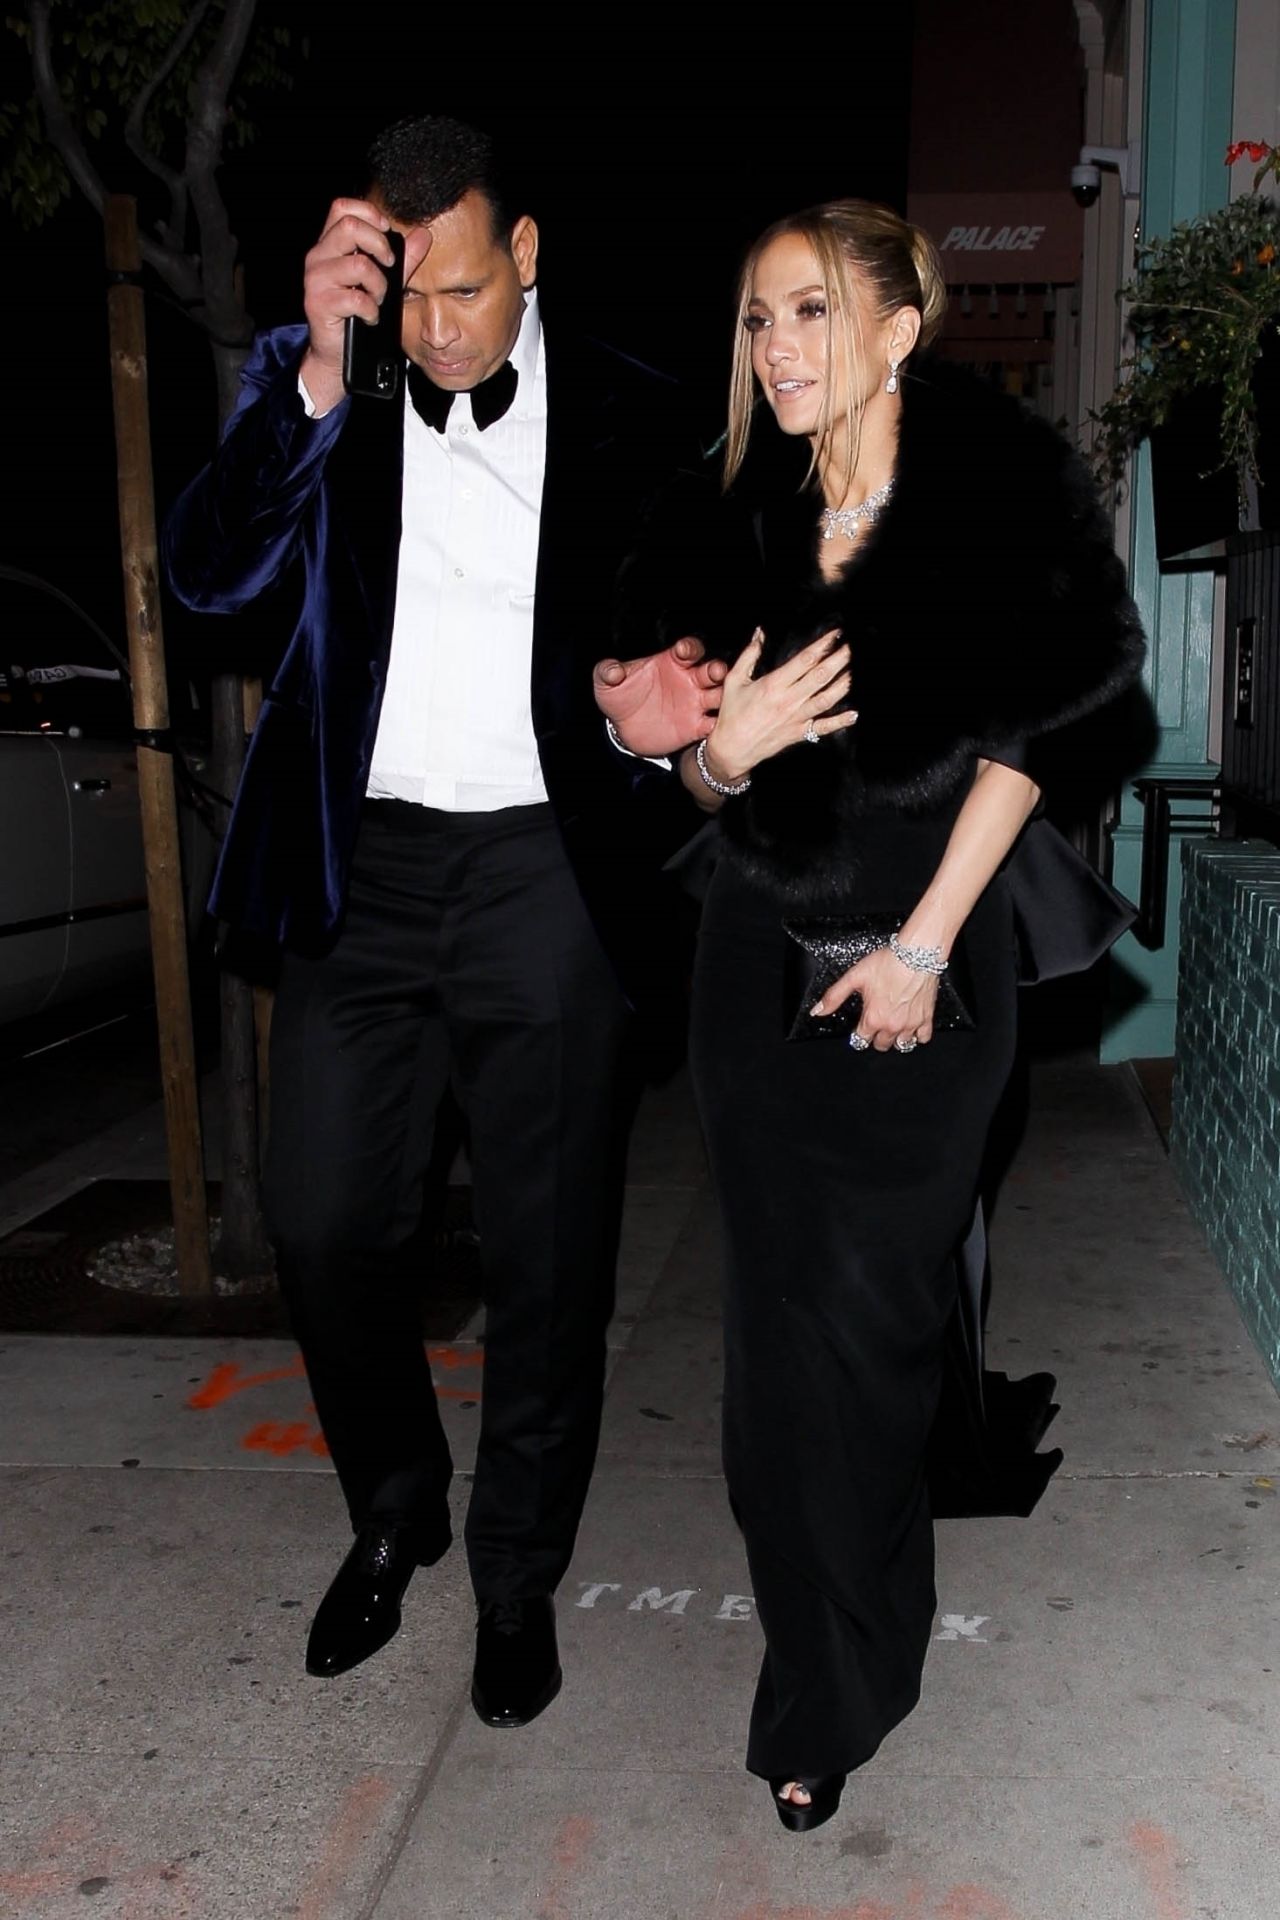 Jennifer Lopez With Her Husband After the SAG Awards 20201280 x 1920